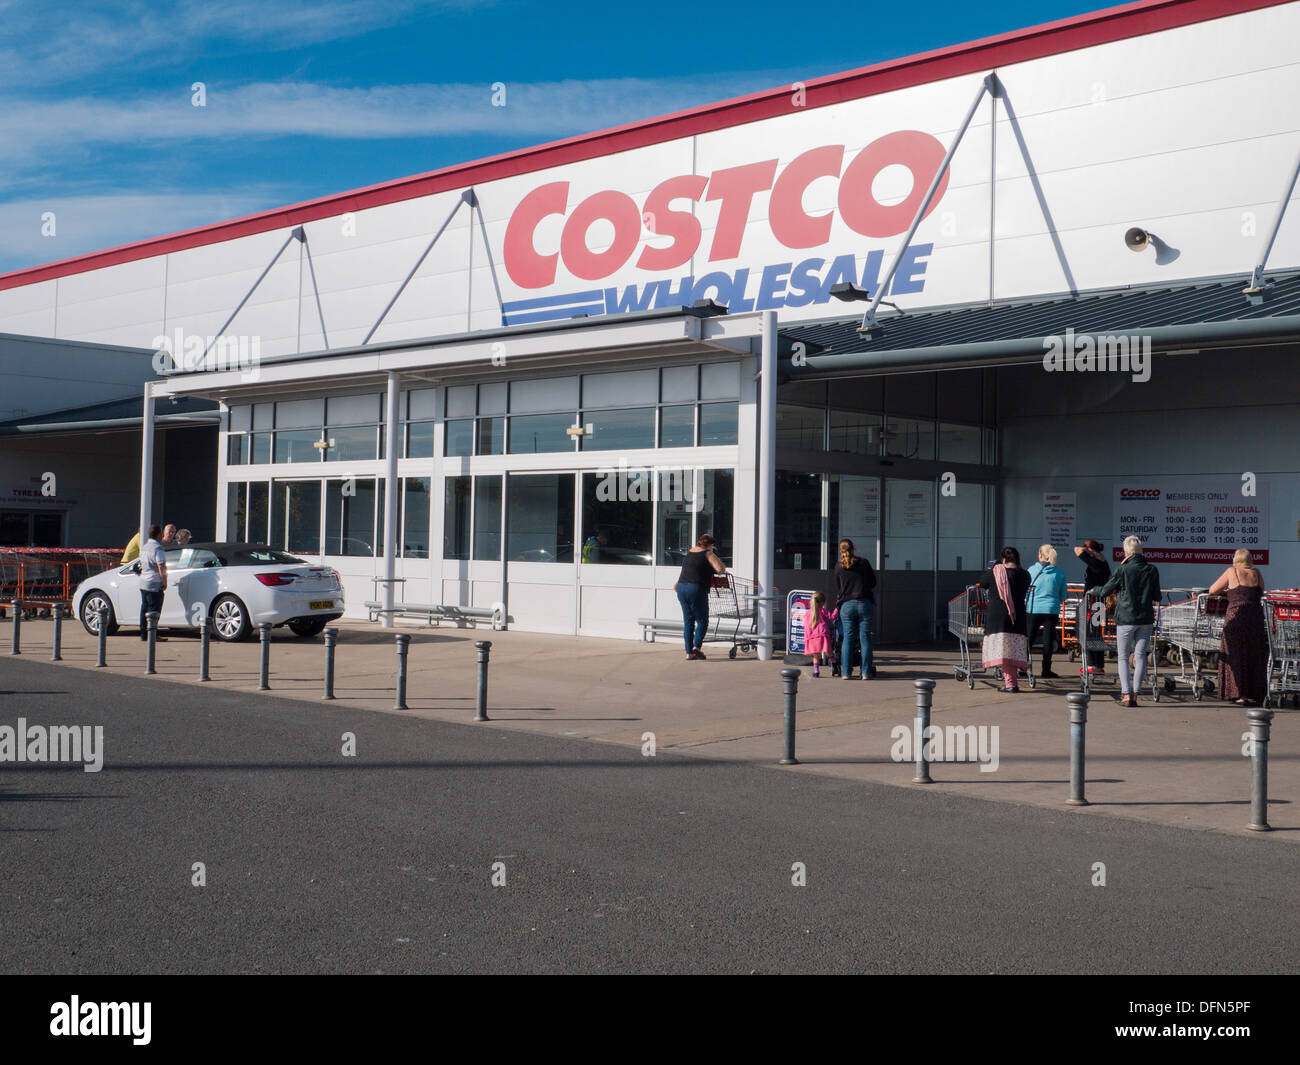 Costco Wholesale Warehouse in Derby, United Kingdom Stock Photo